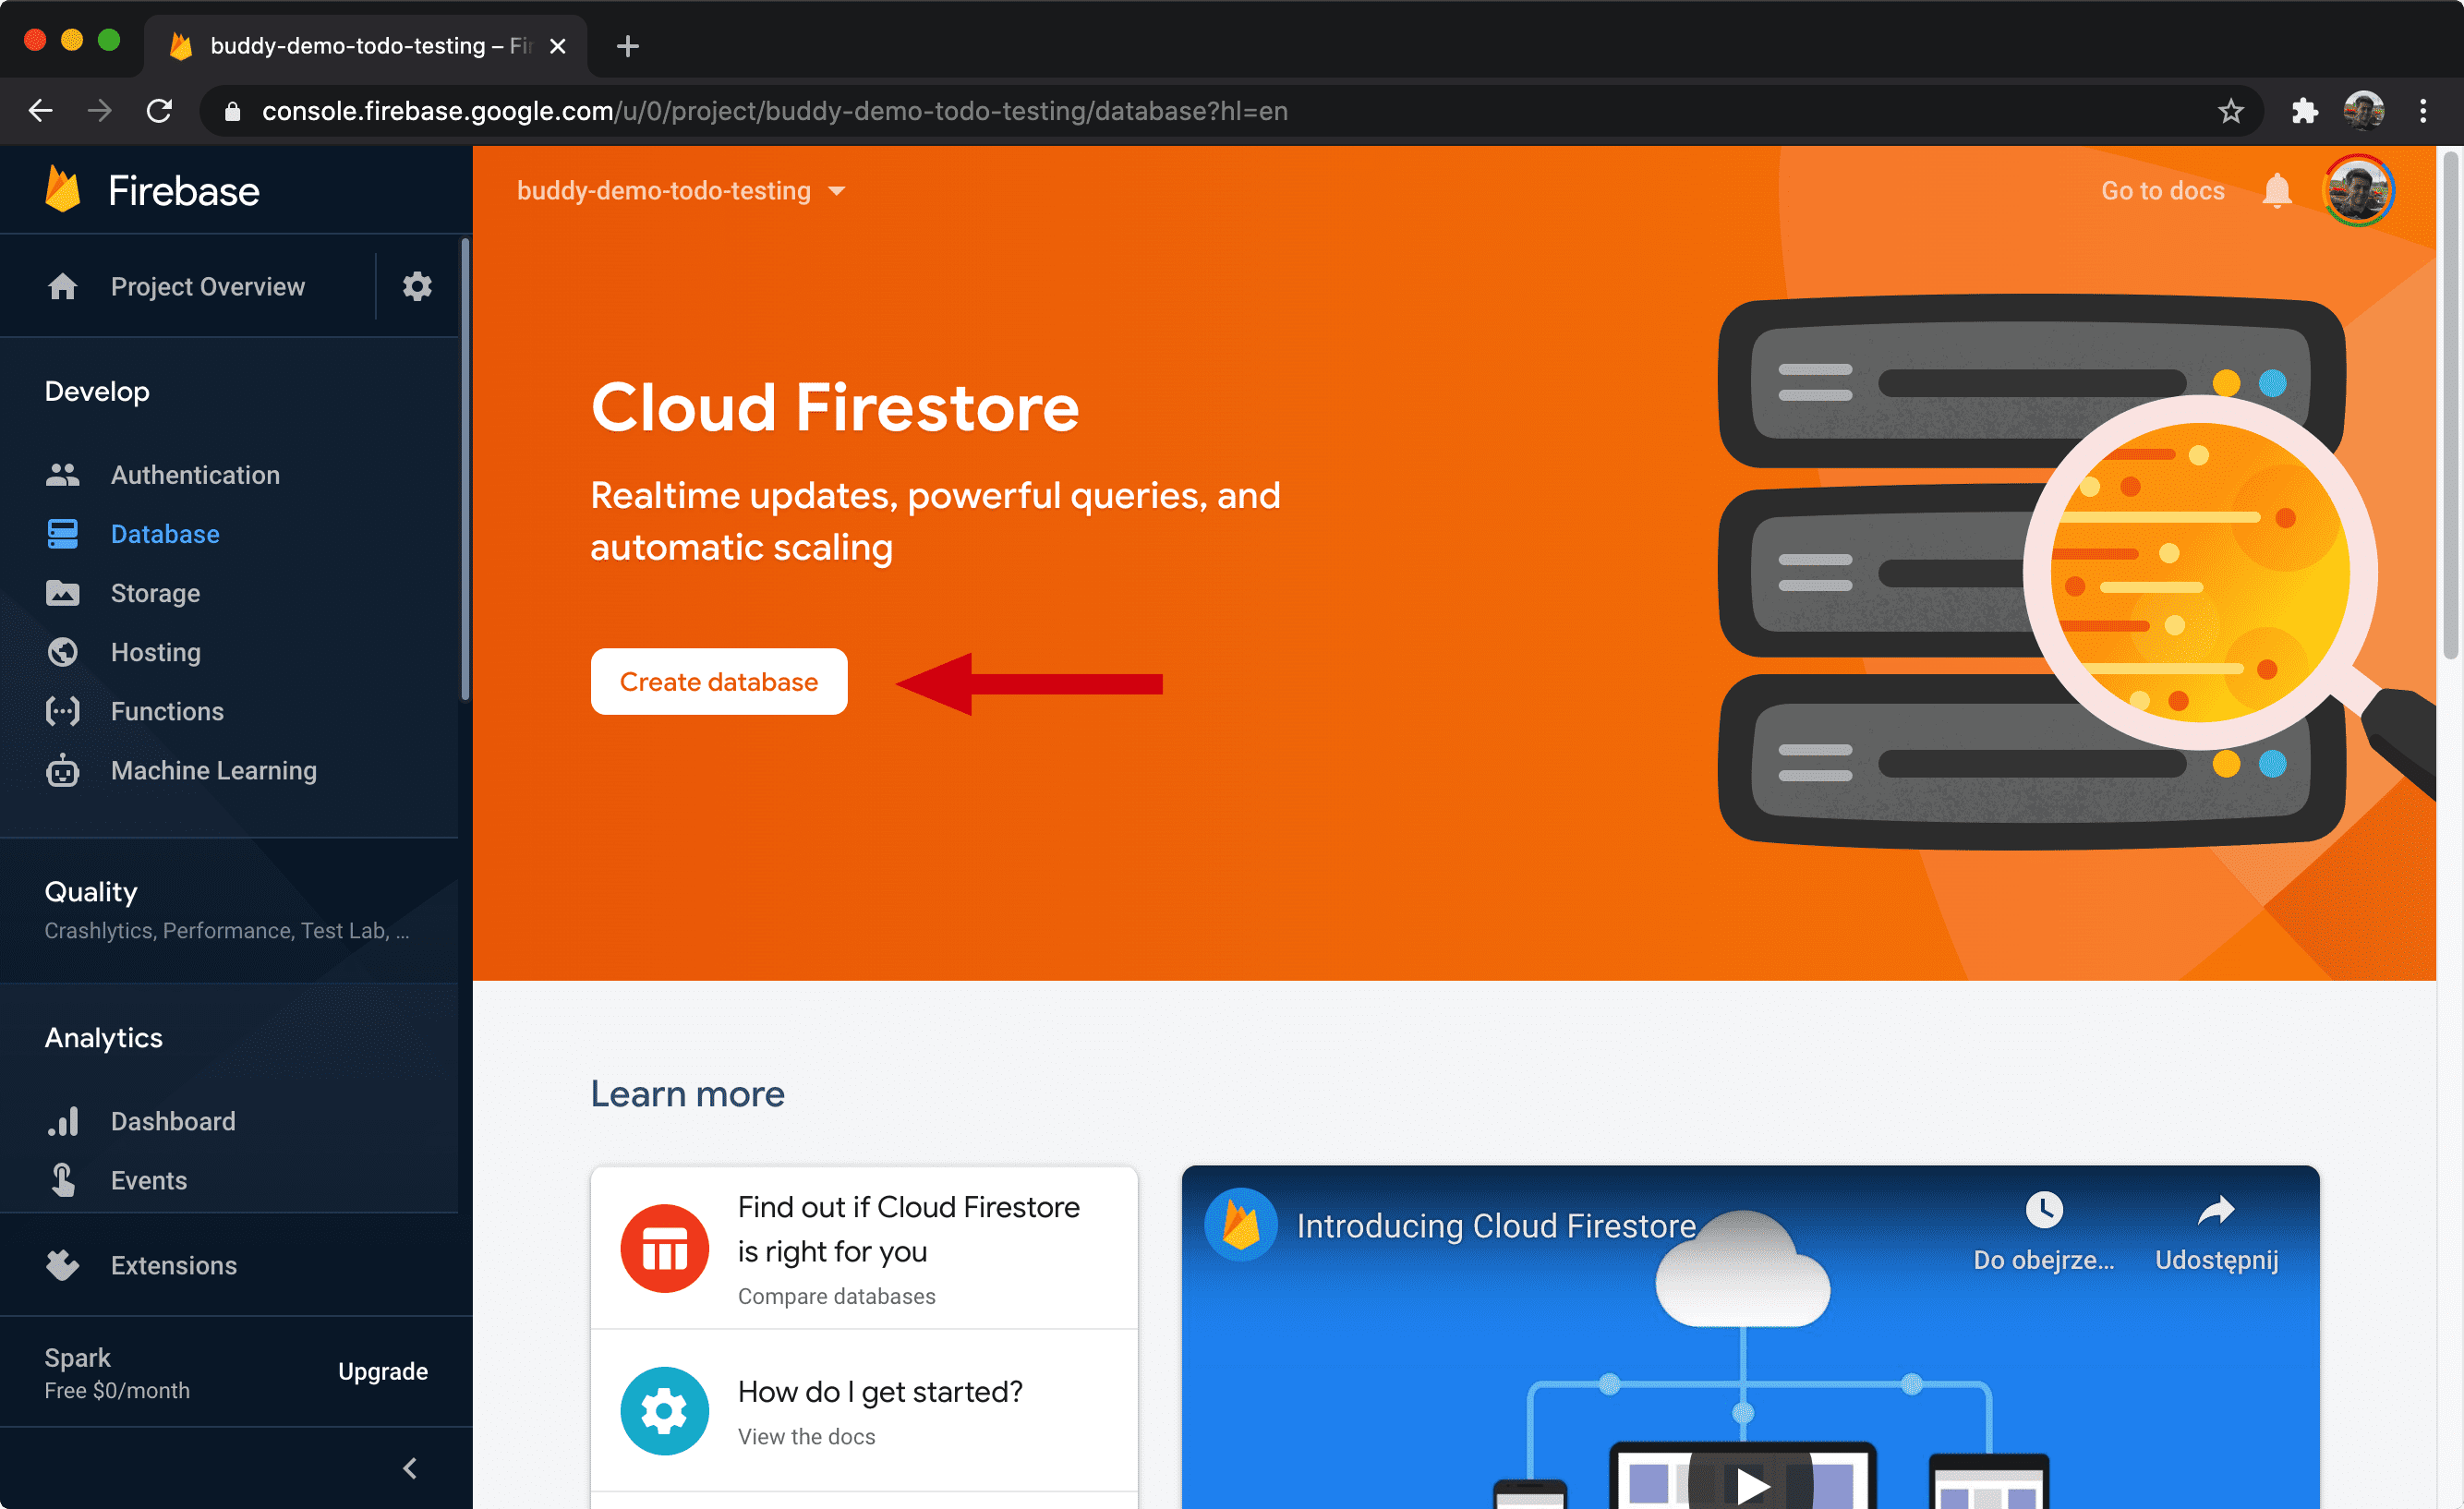 Creating new Cloud Firestore database